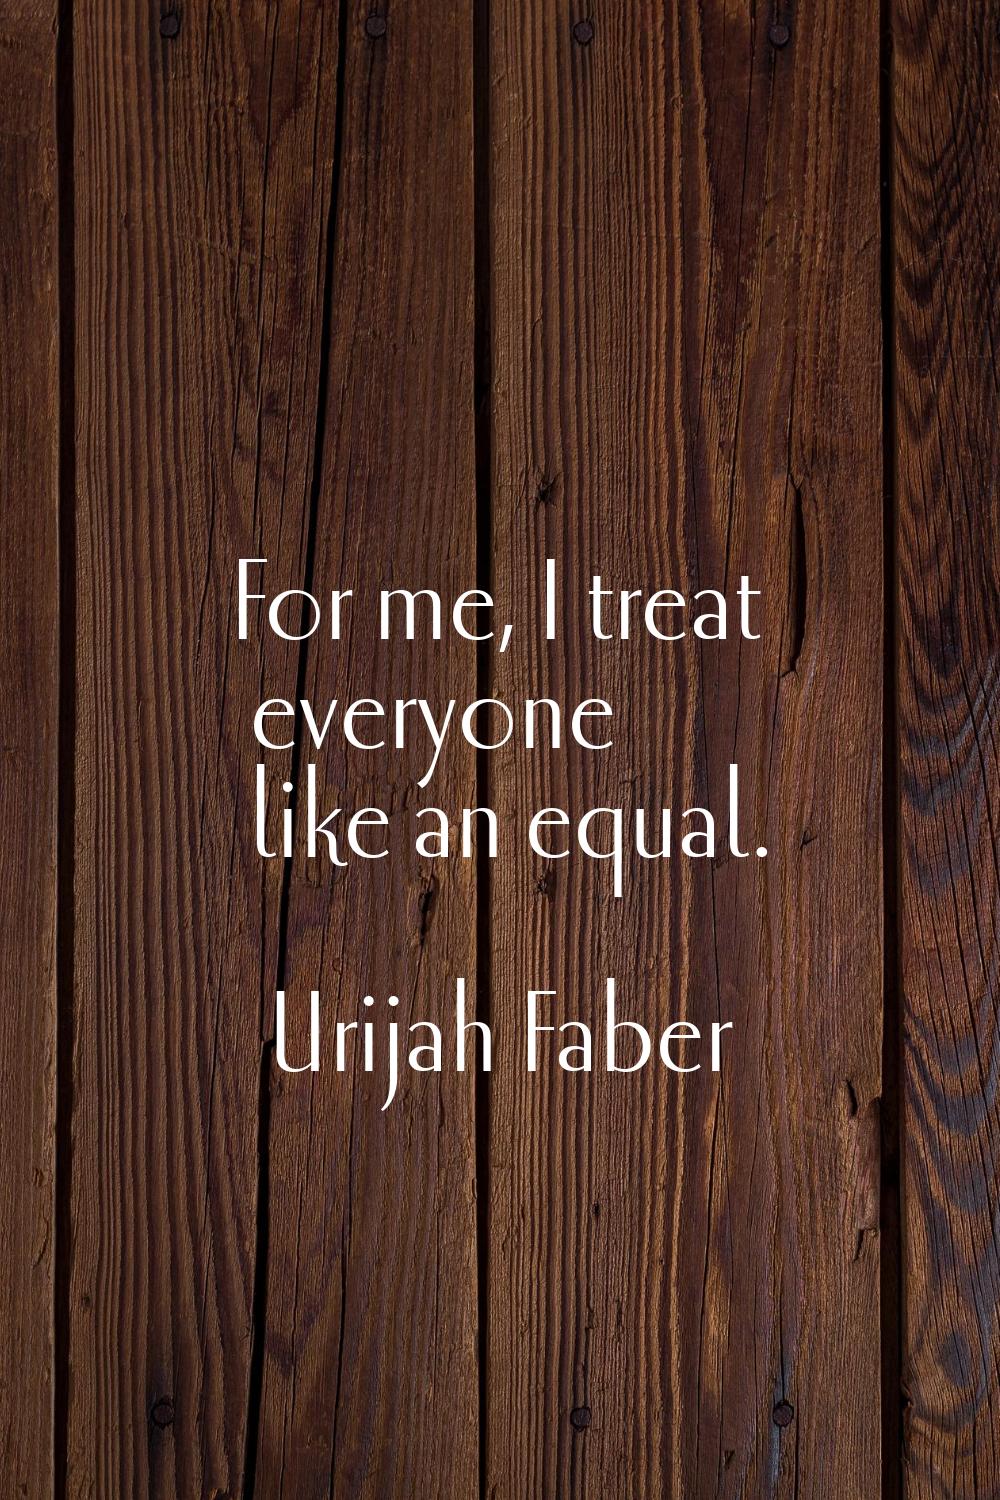 For me, I treat everyone like an equal.